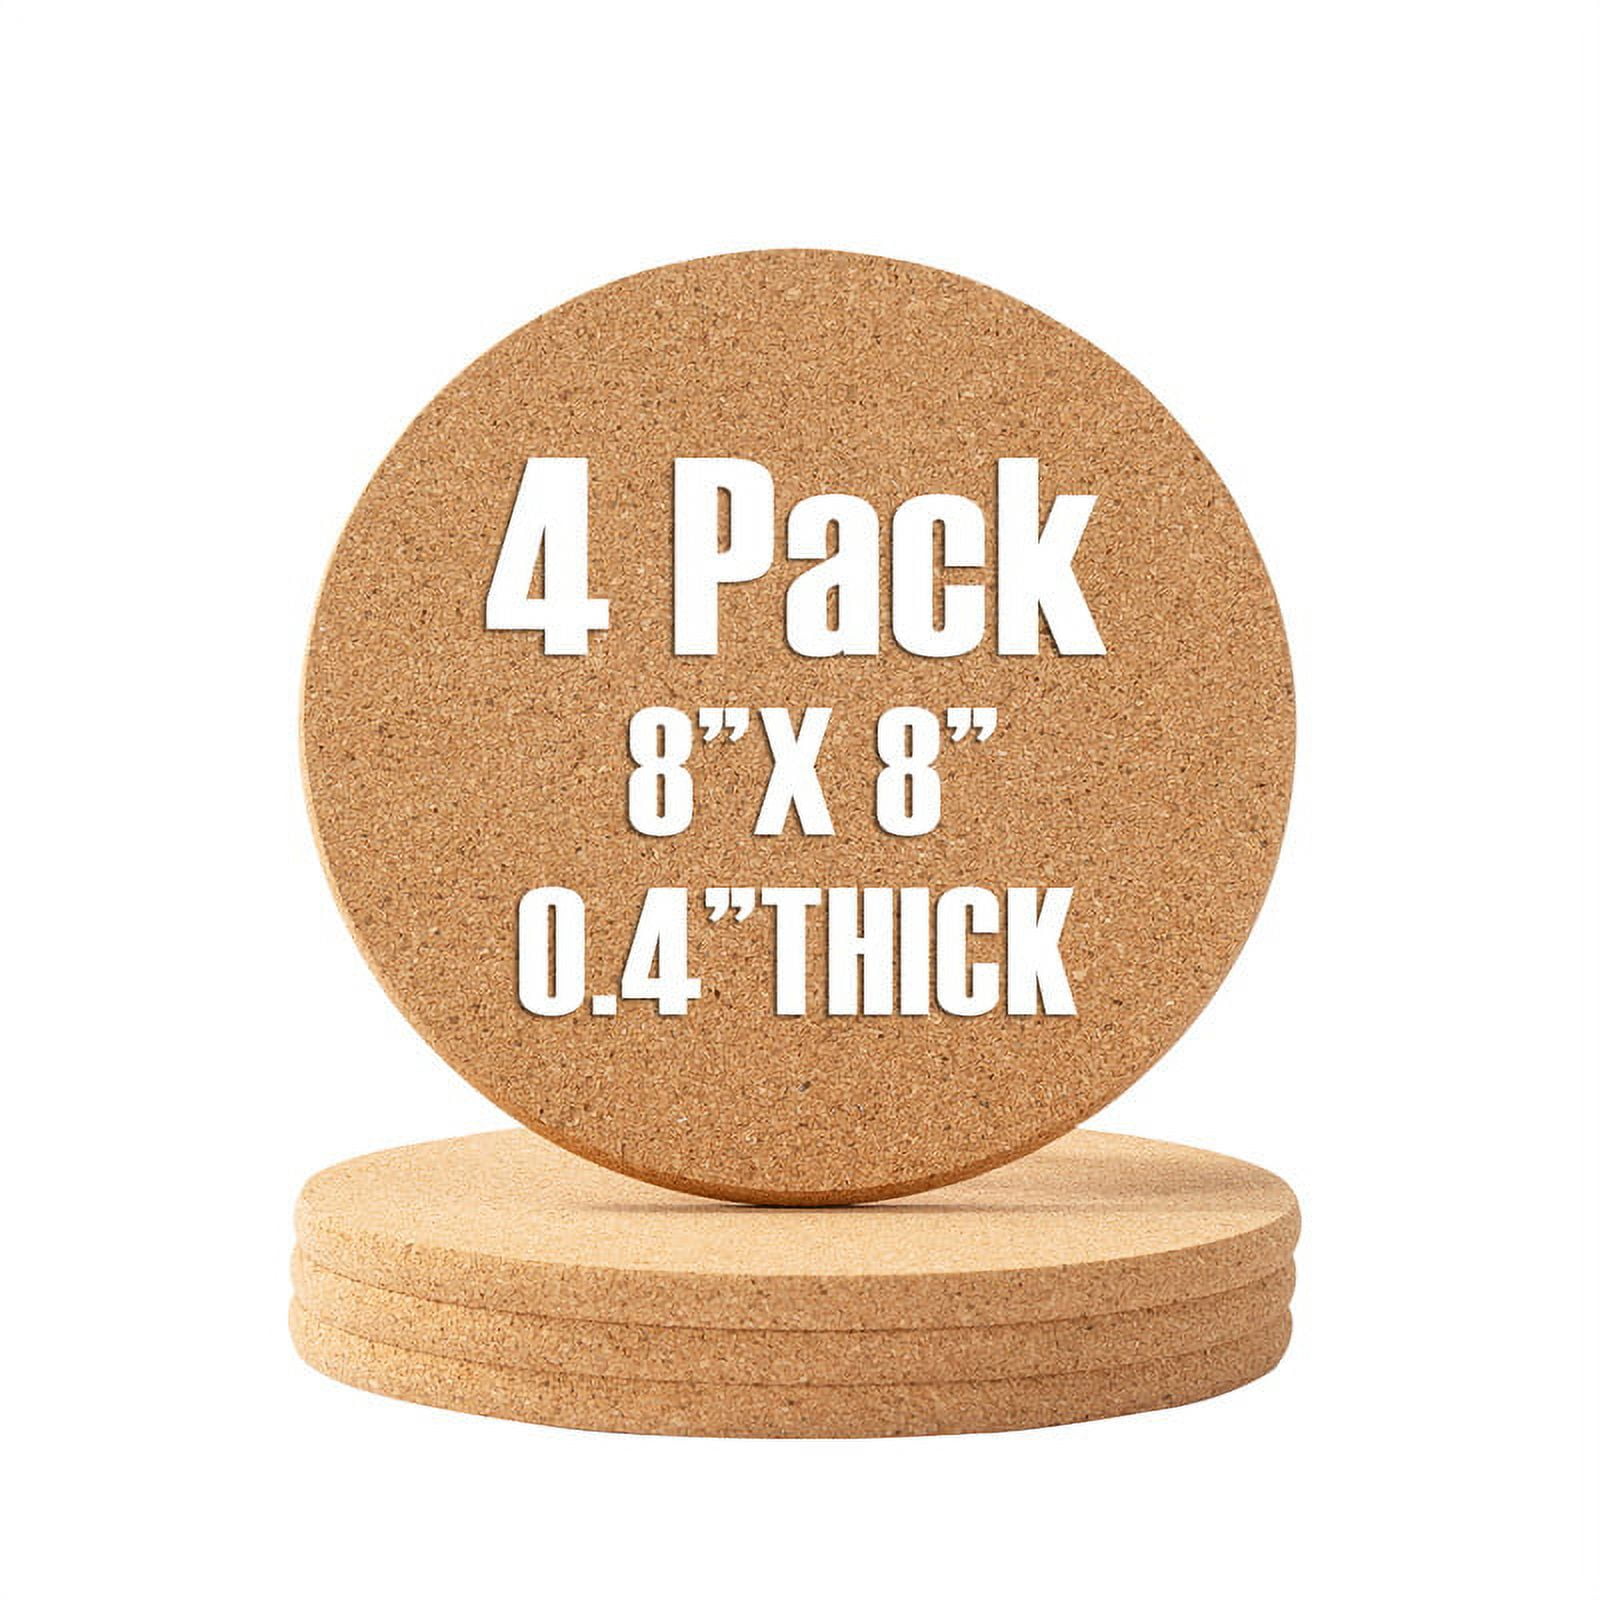 1/2 x 6 Cork Squares - buy cork pads, trivets